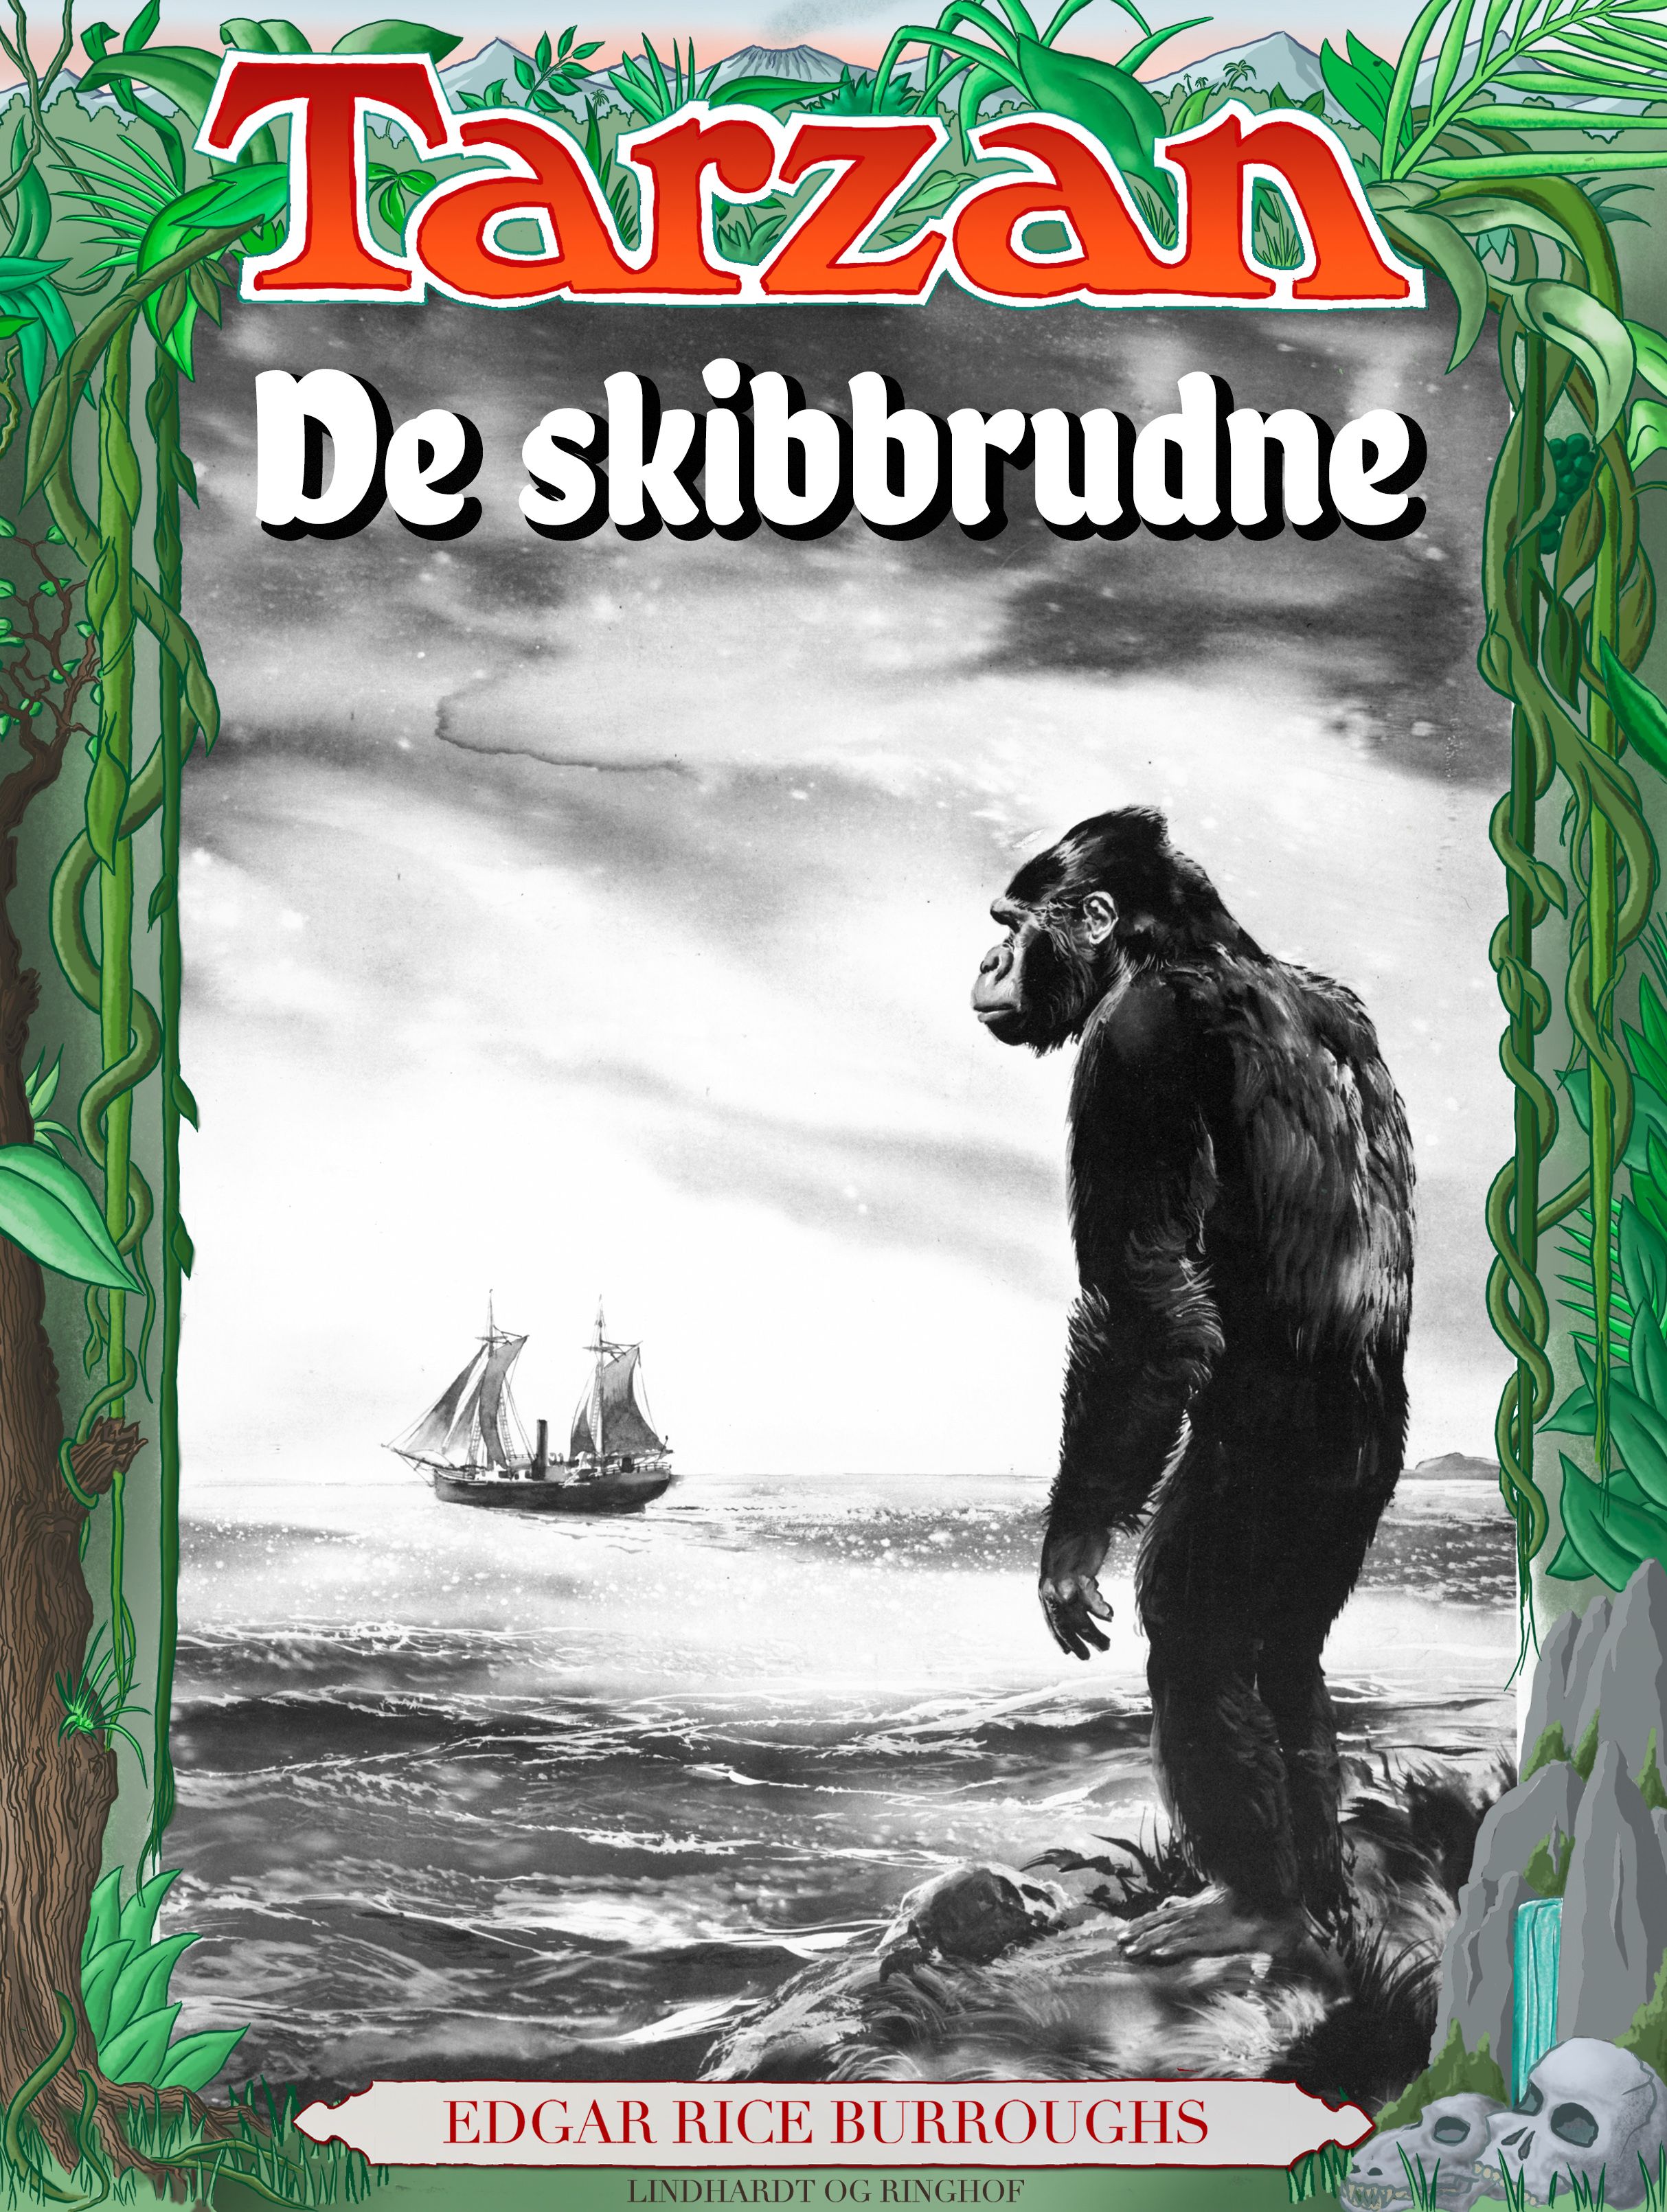 Tarzan - De skibbrudne, e-bog af Edgar Rice Burroughs